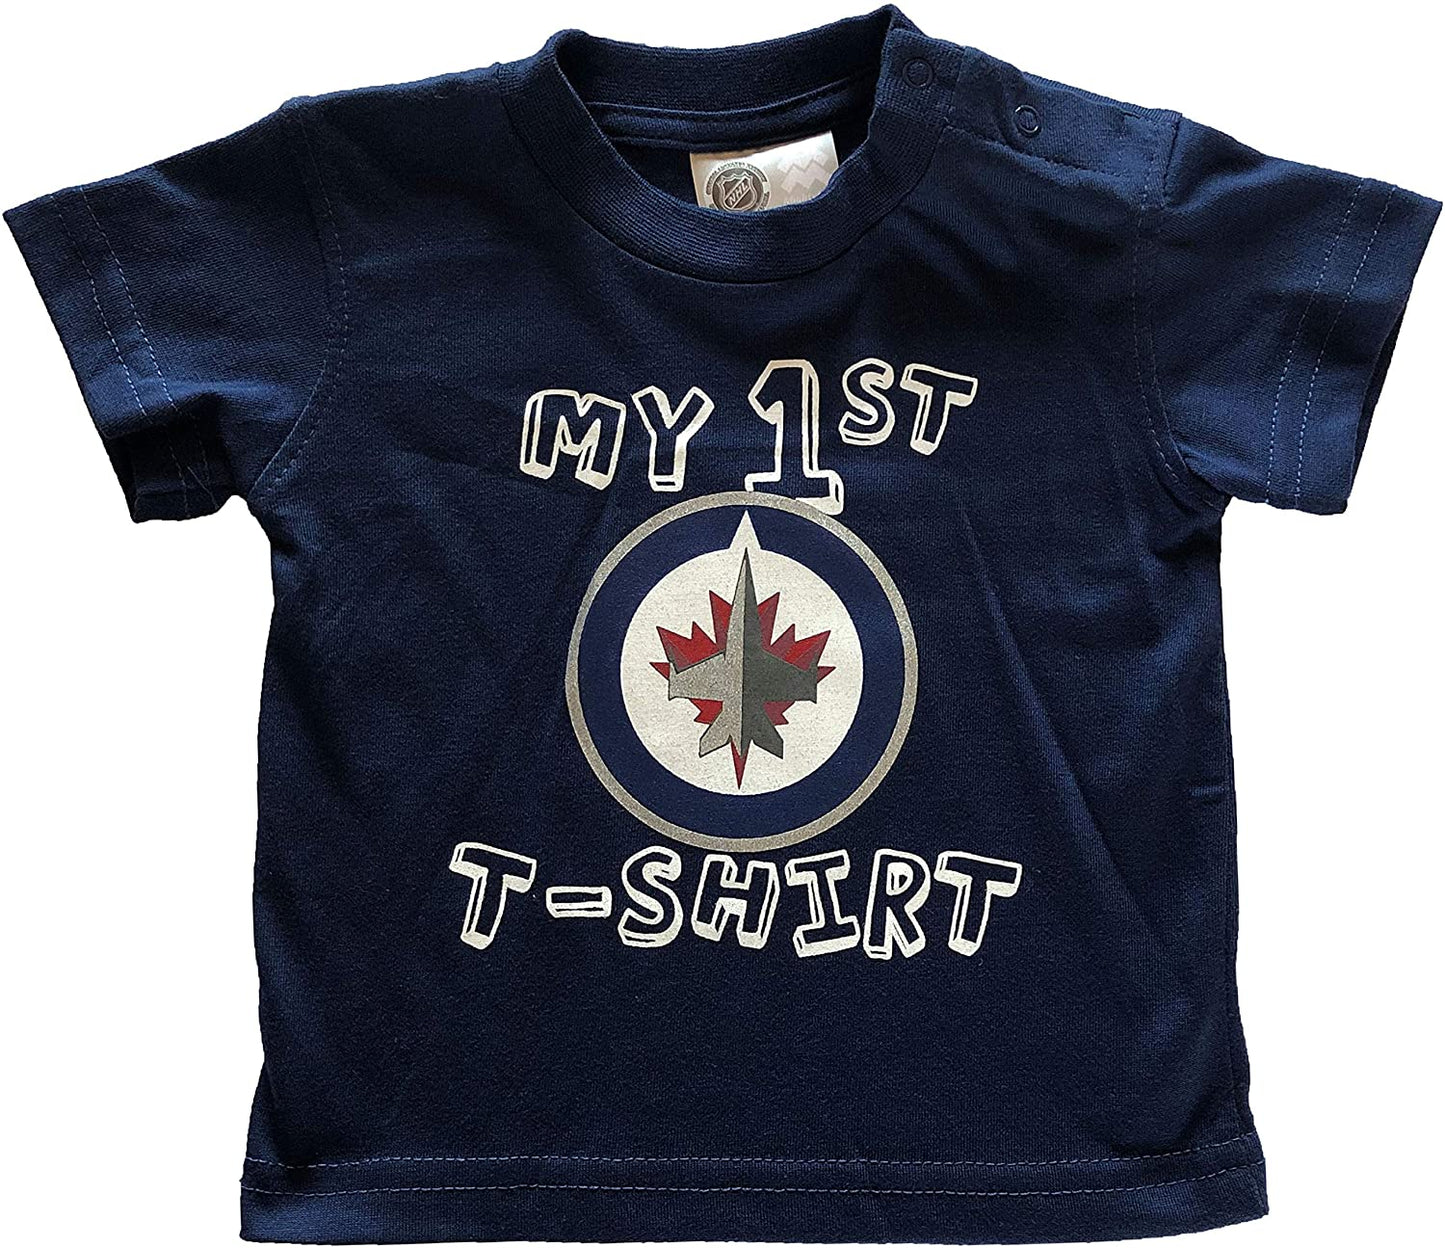 NHL Infant T-Shirt "My 1st" Jets